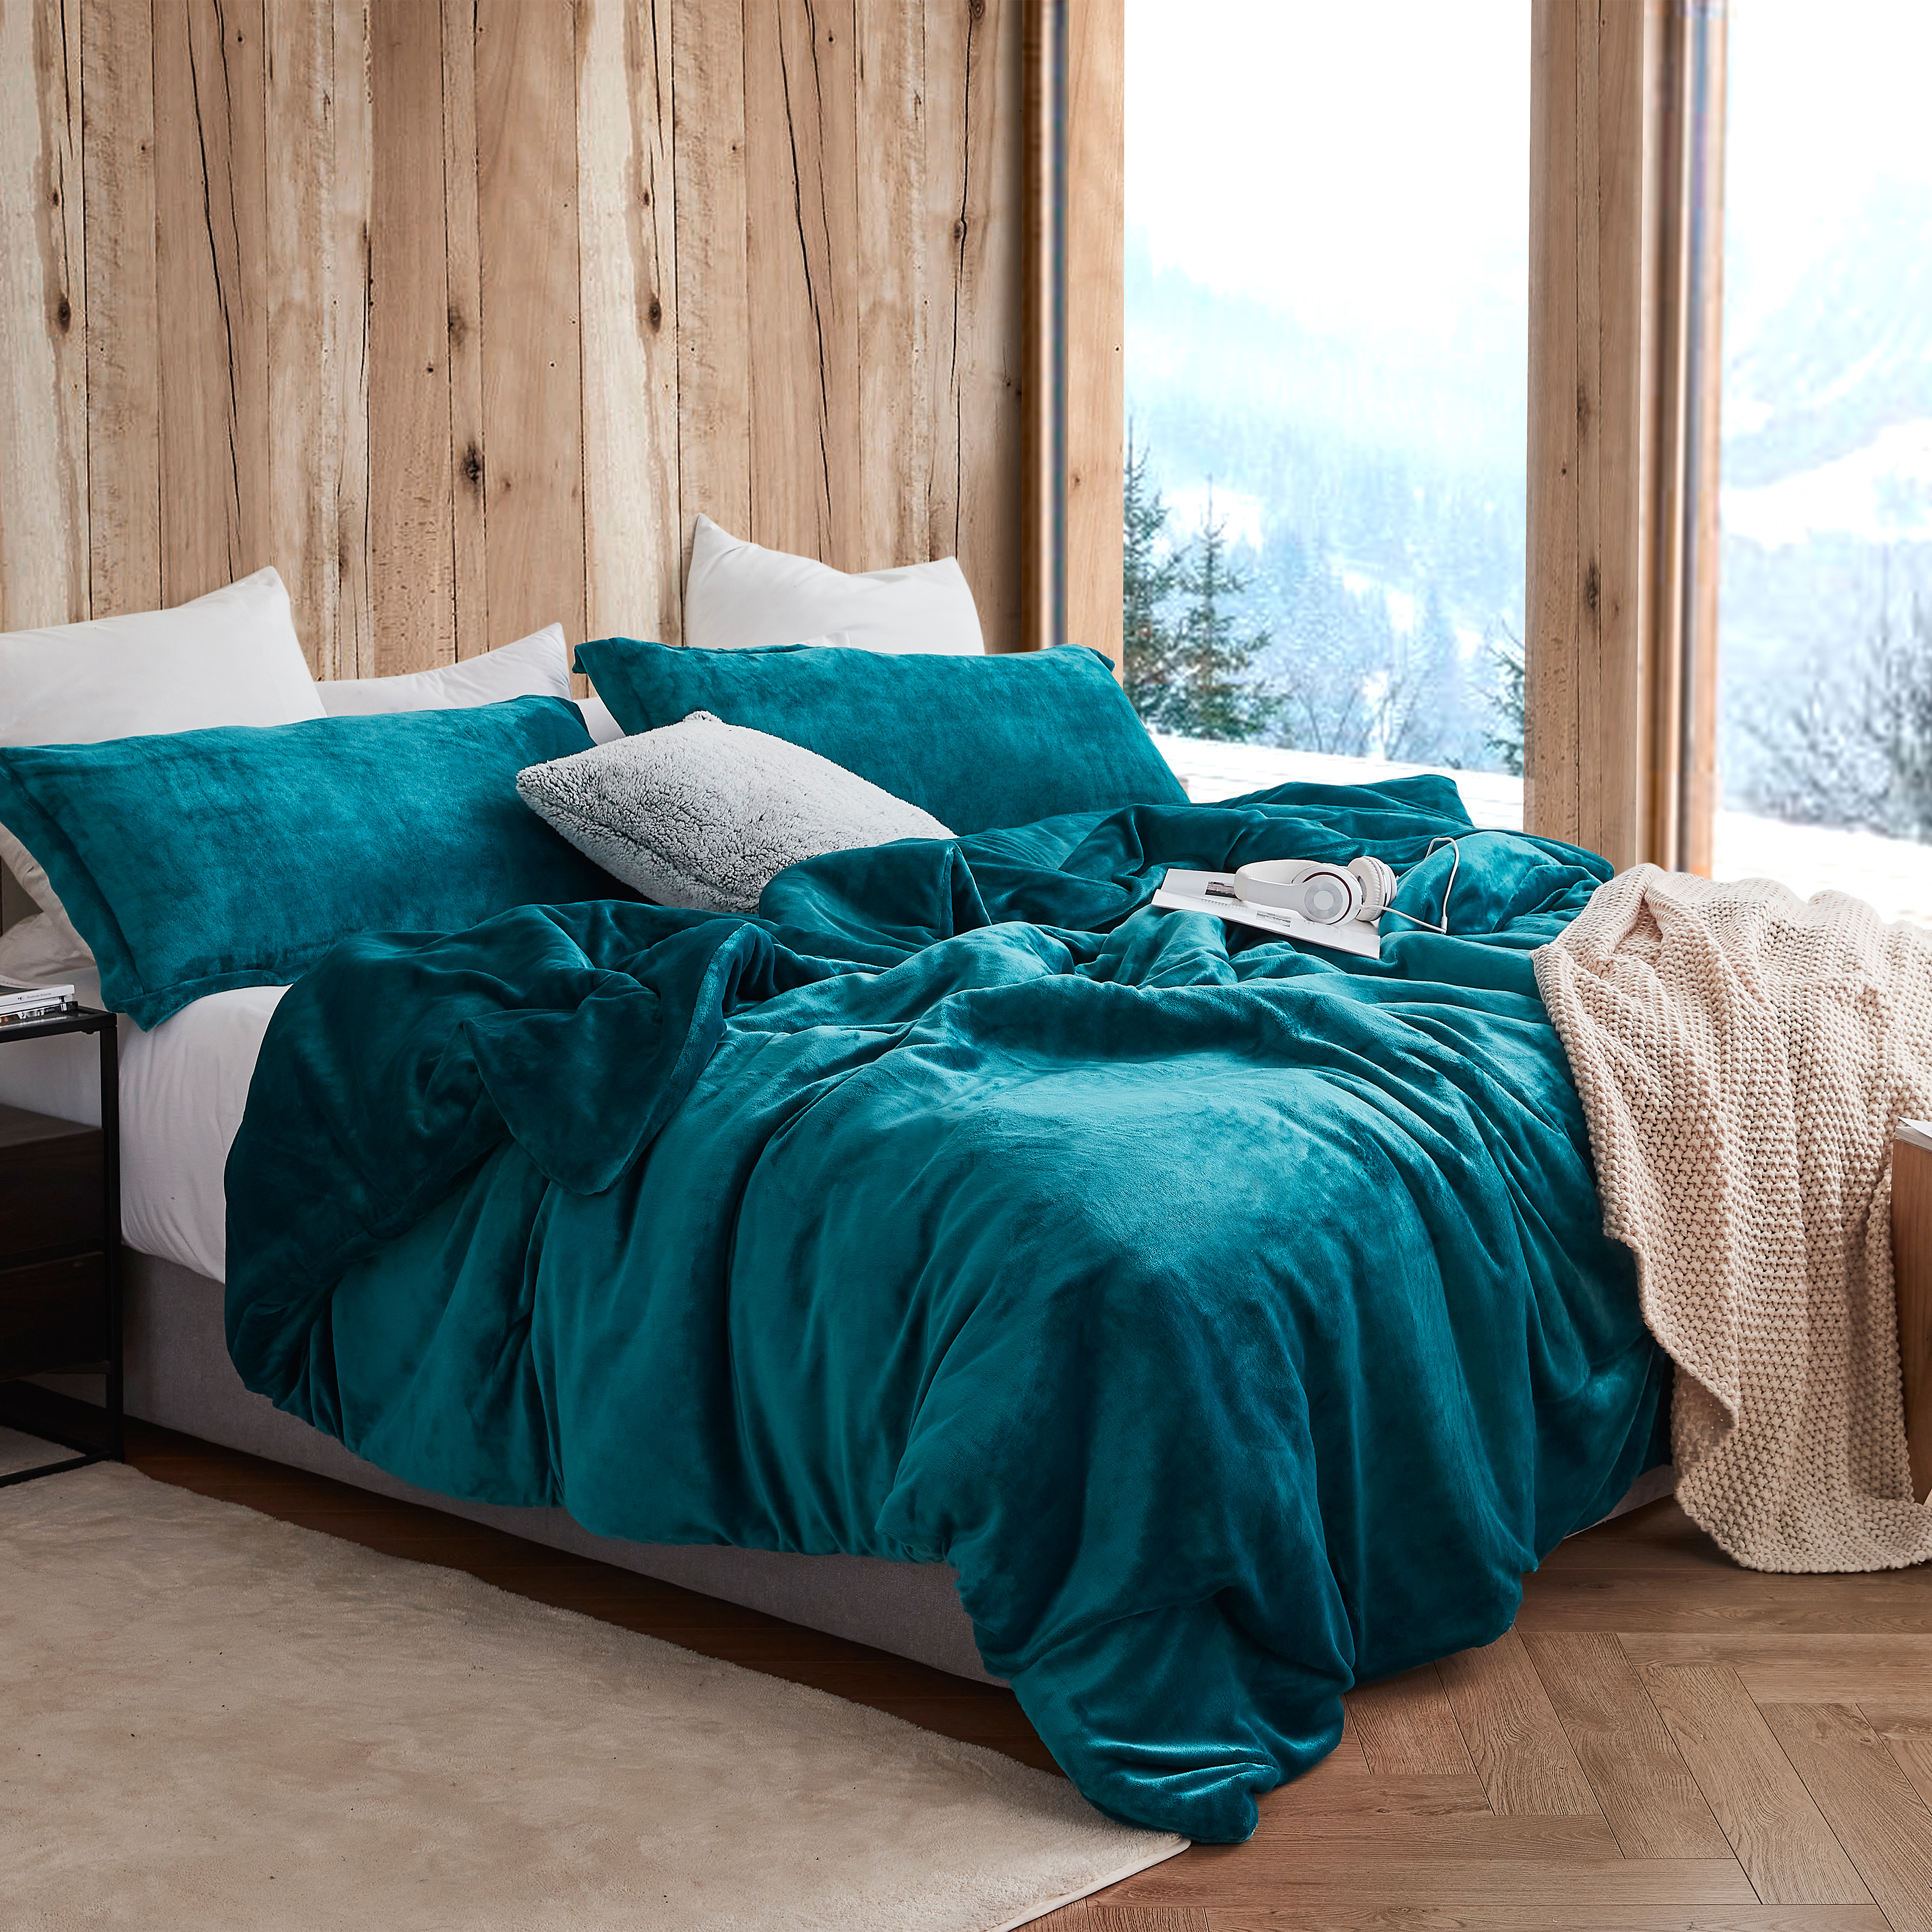 Coma Inducer Oversized Comforter - The Original Plush - Deep Lagoon Blue